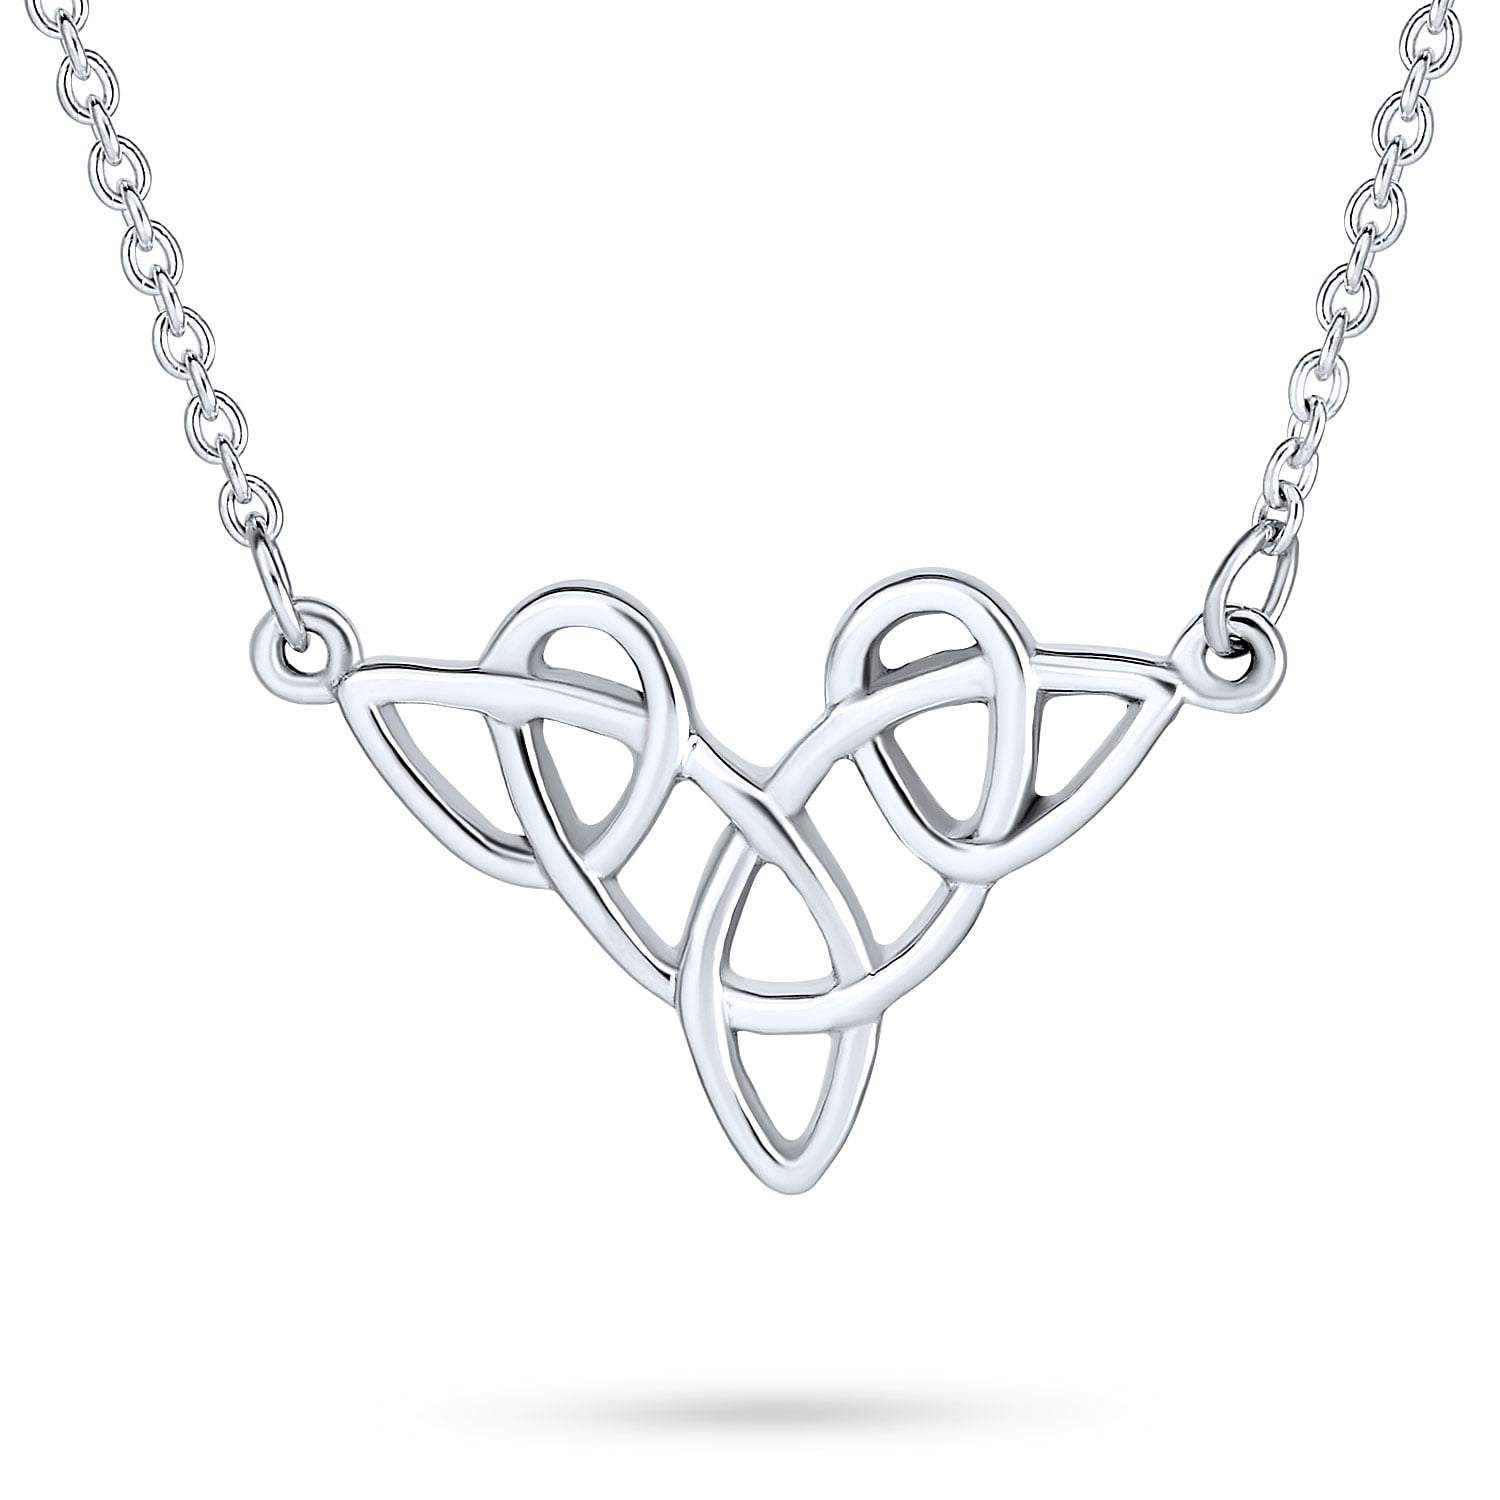 Celtic Triquetra Knot Ancient Symbol Pendant Necklace Stainless Steel Free P&P 